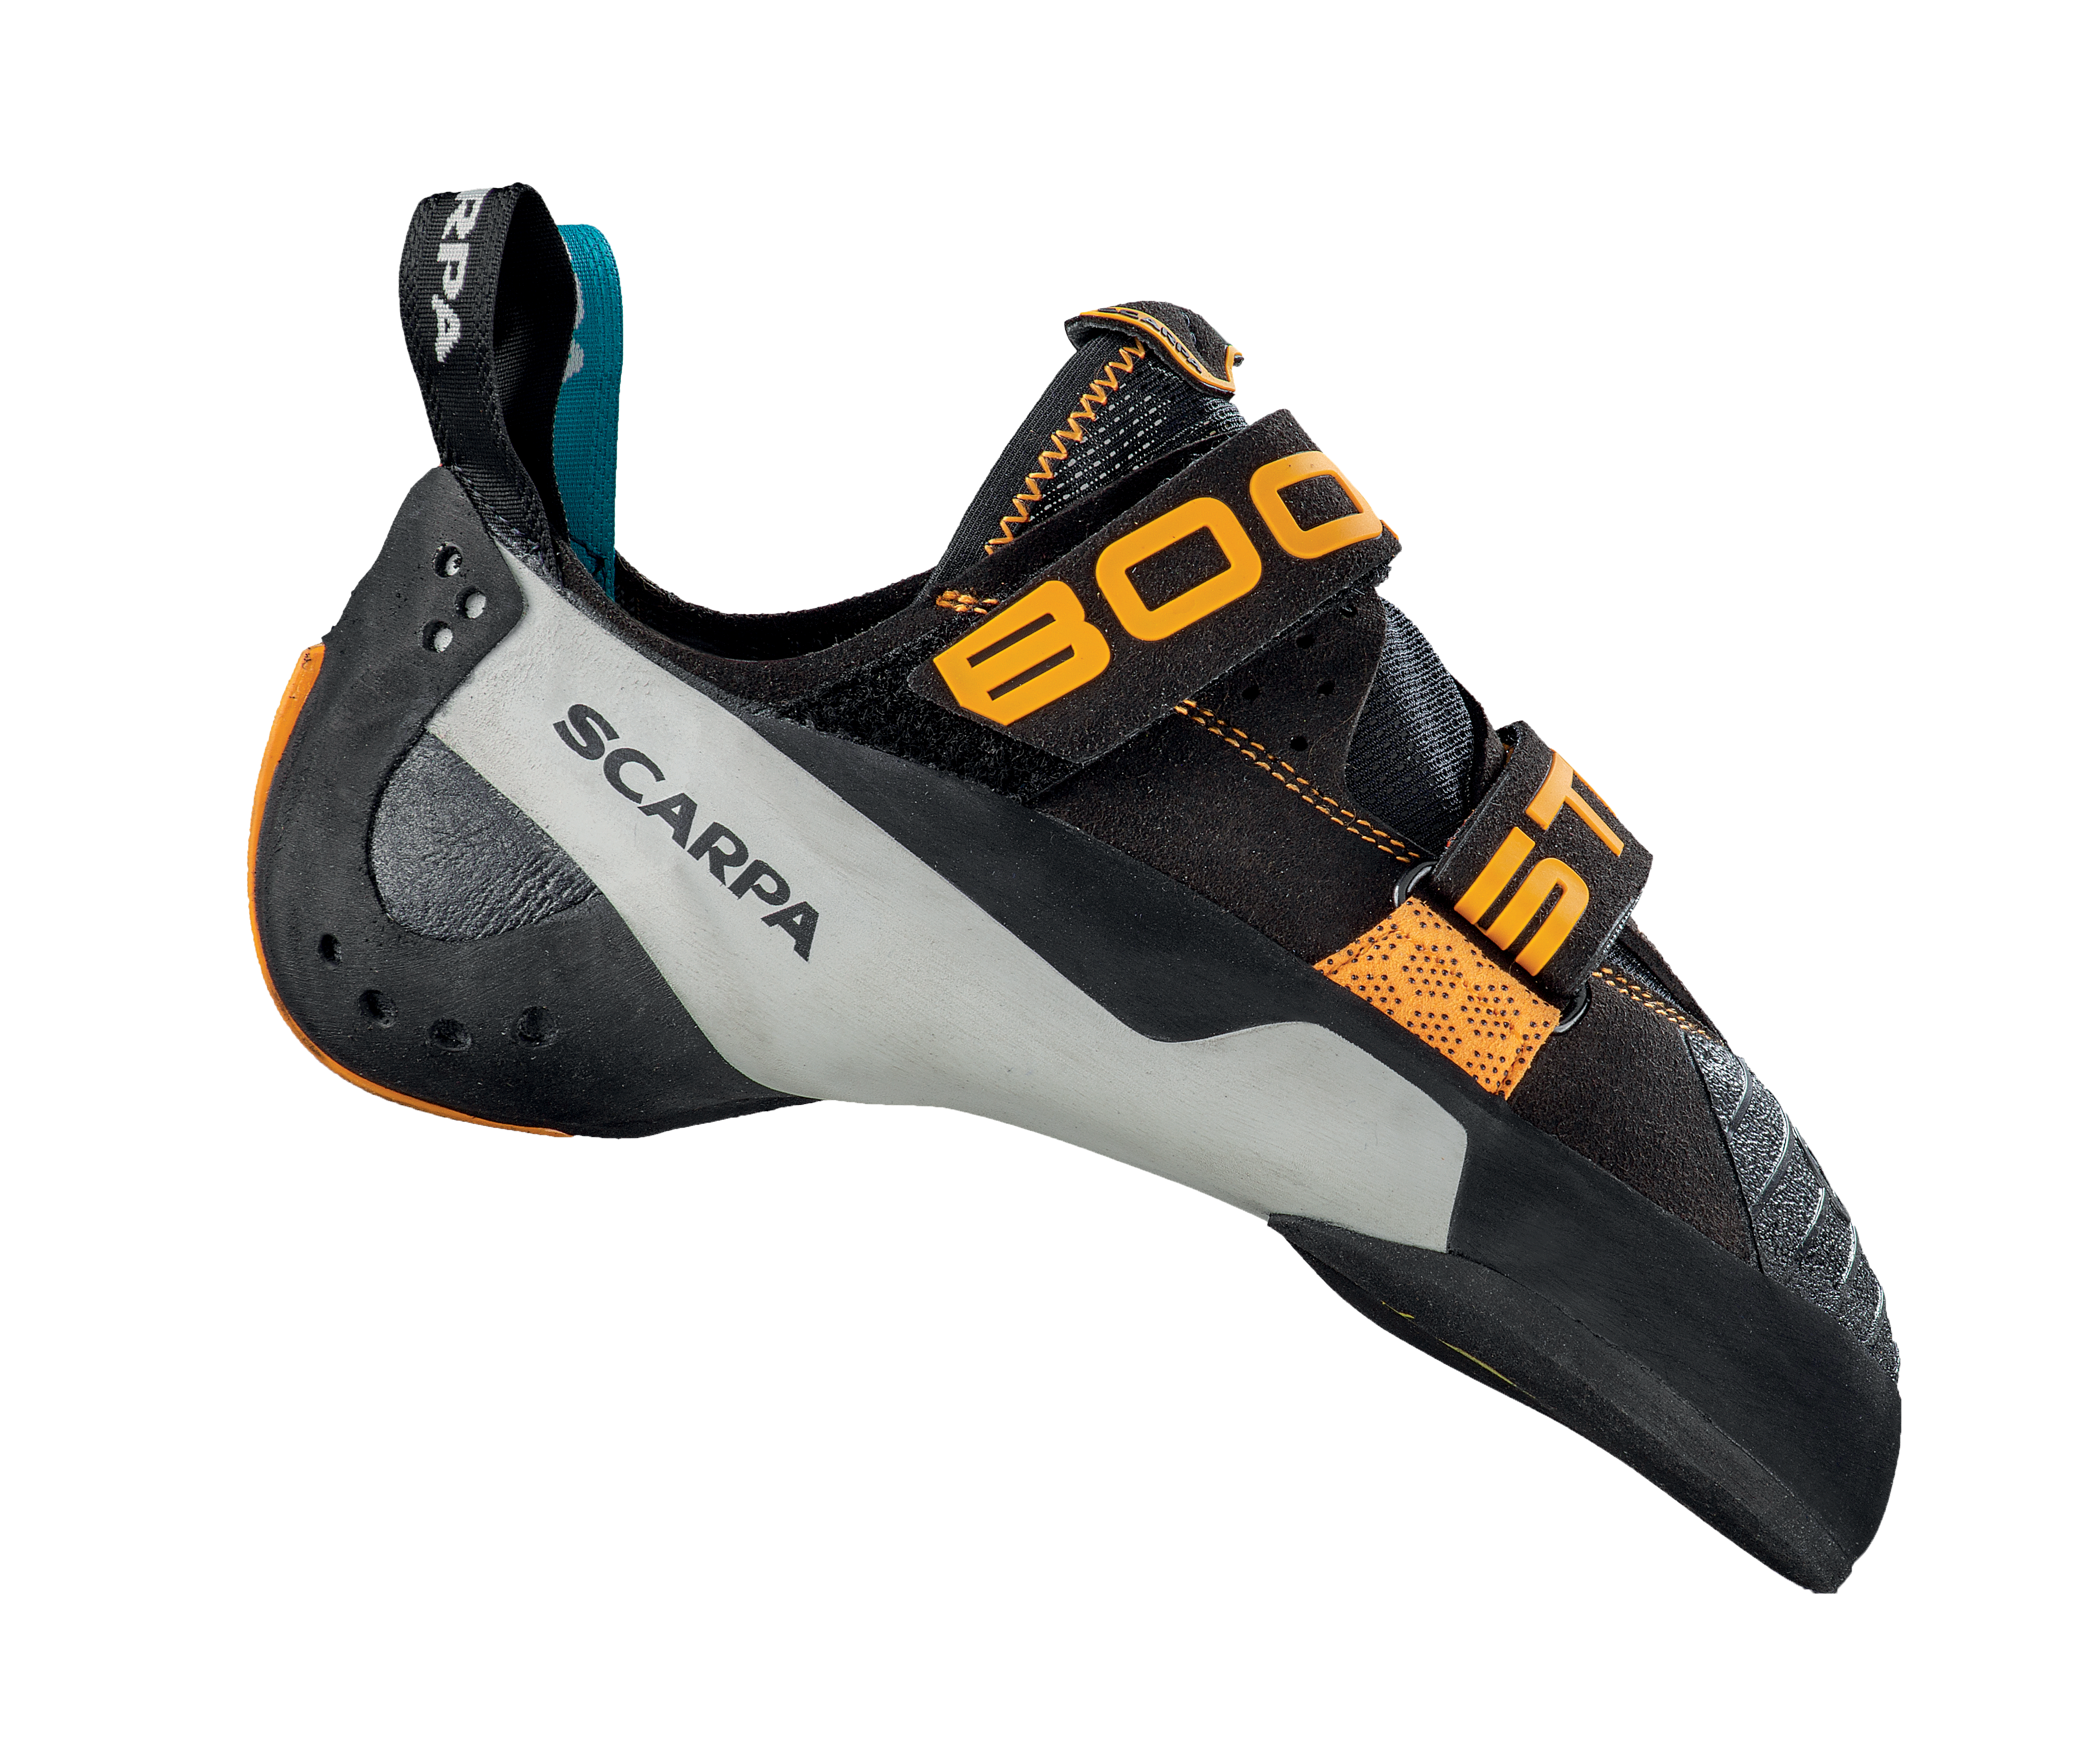 2020 Comp Climbing Shoe Review: Scarpa Drago LV (& Drago)